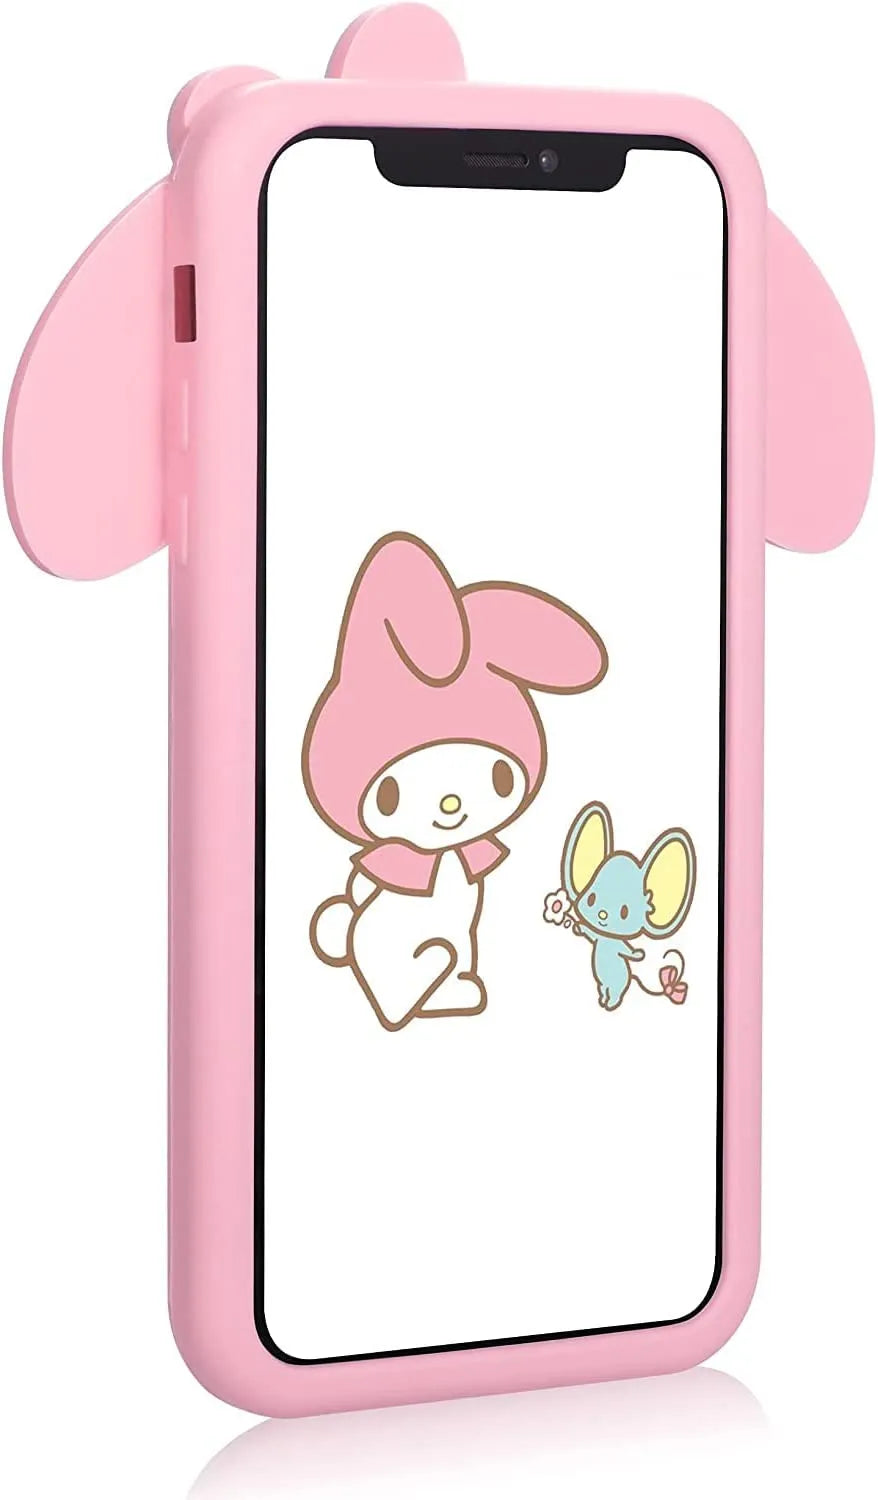 Cute Sanrio My Melody iPhone Case